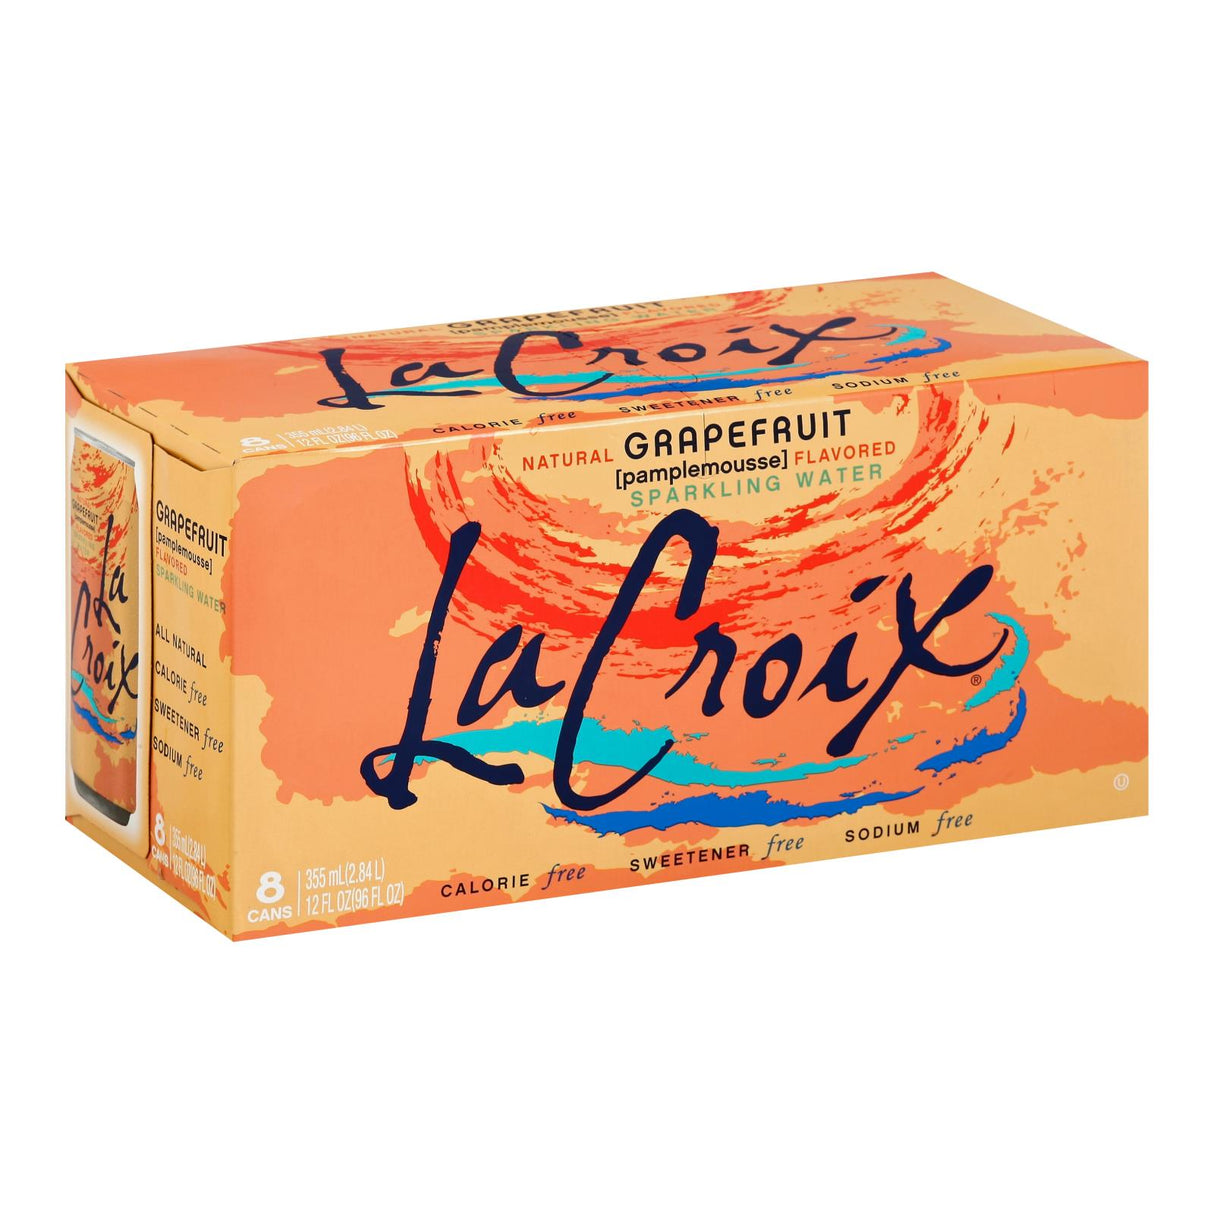 Lacroix Sparkling Water - Grapefruit Water - Case Of 3 - 12 Fl Oz.